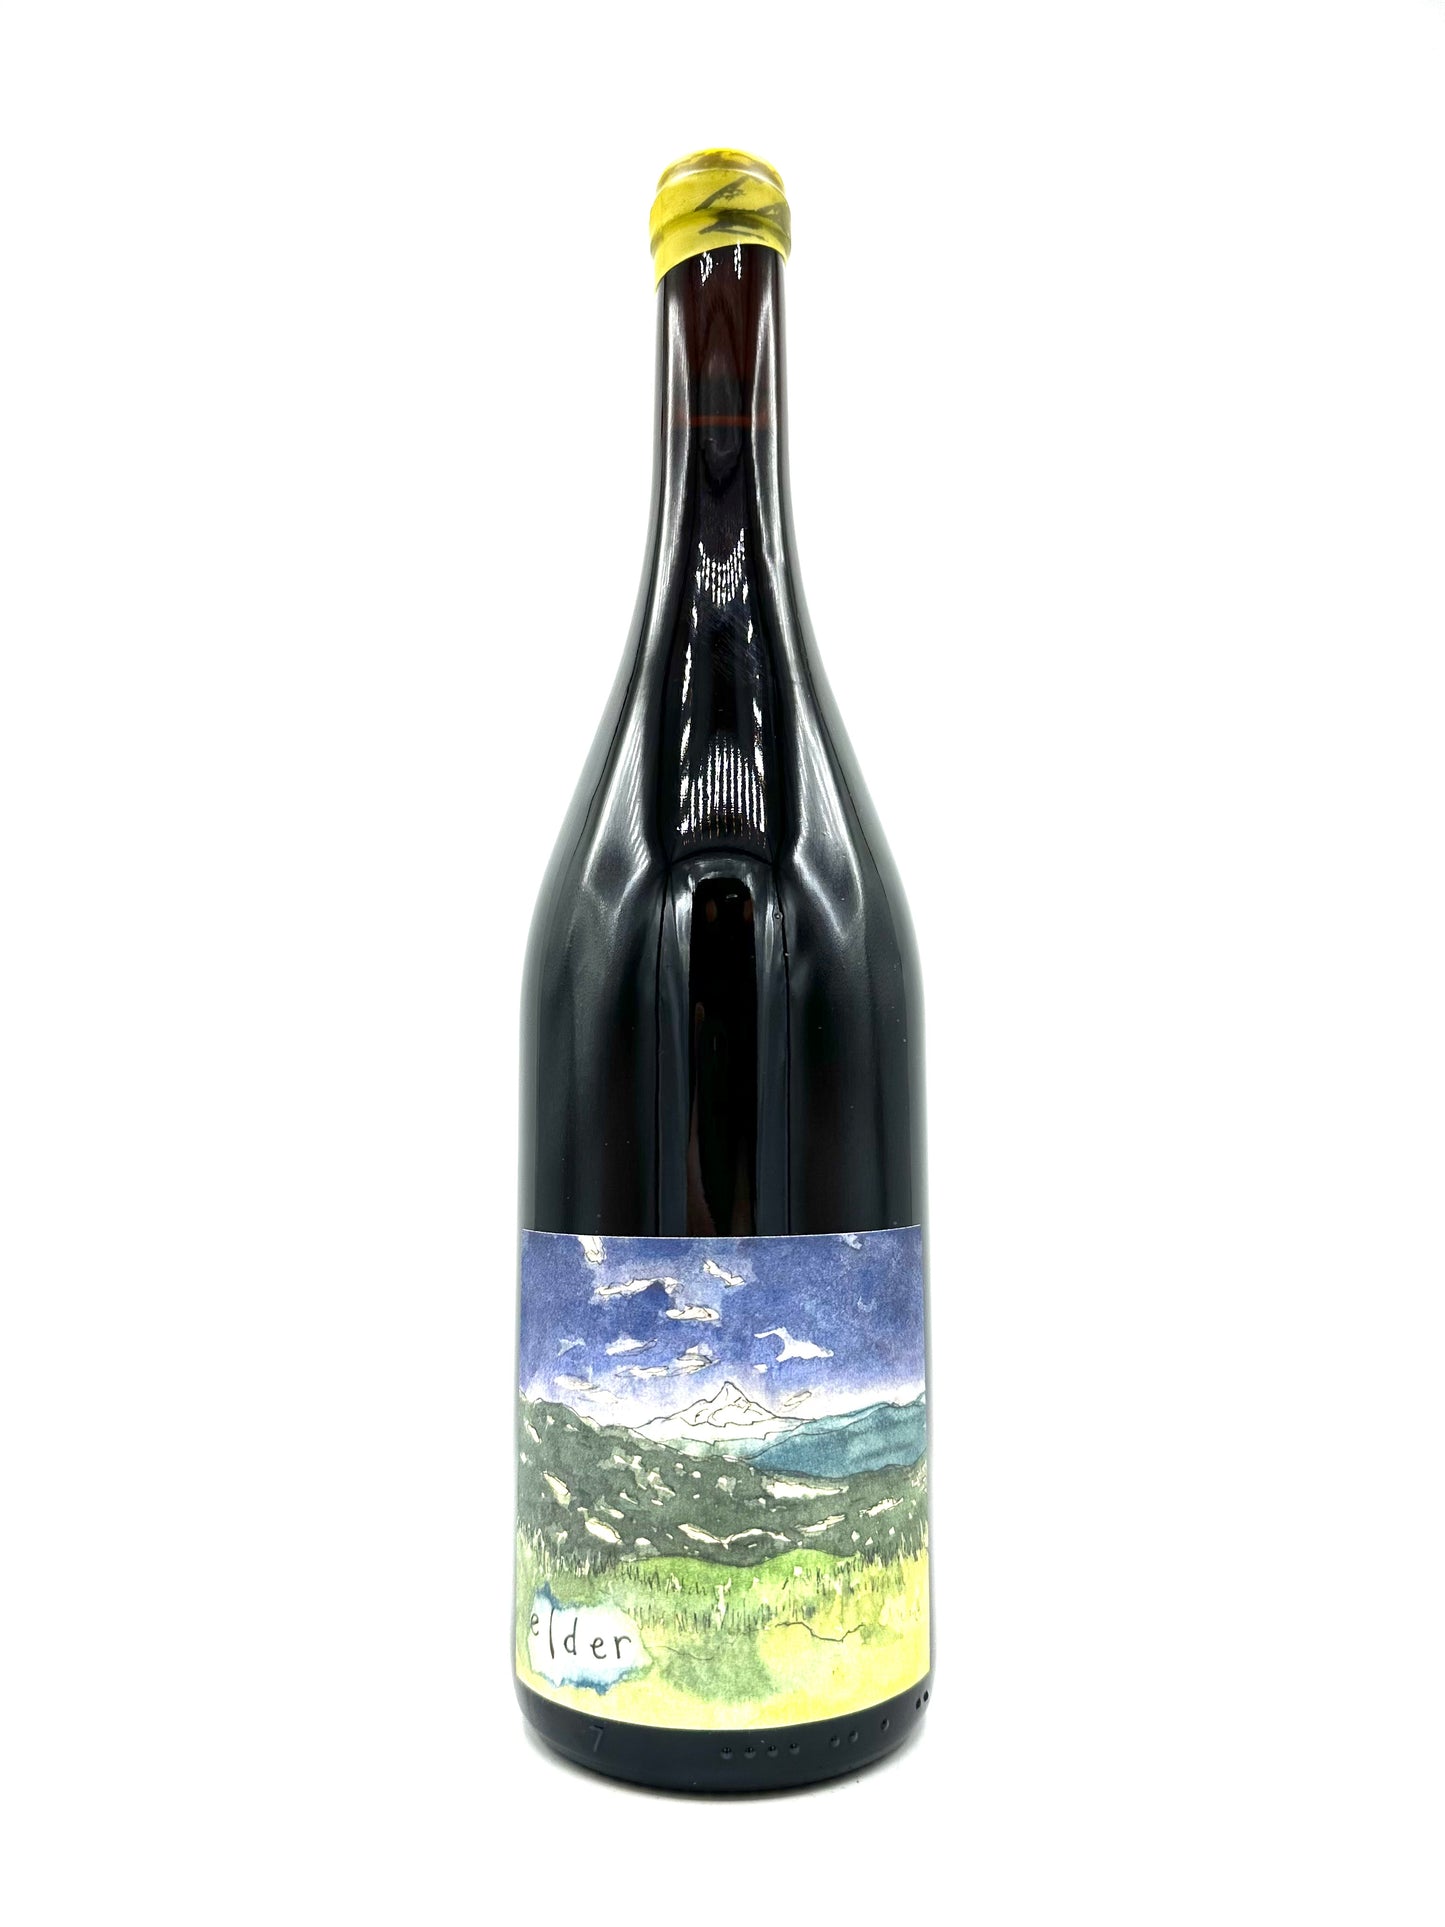 Hiyu Tzum 'Elder' Columbia Gorge Pinot Noir 2021